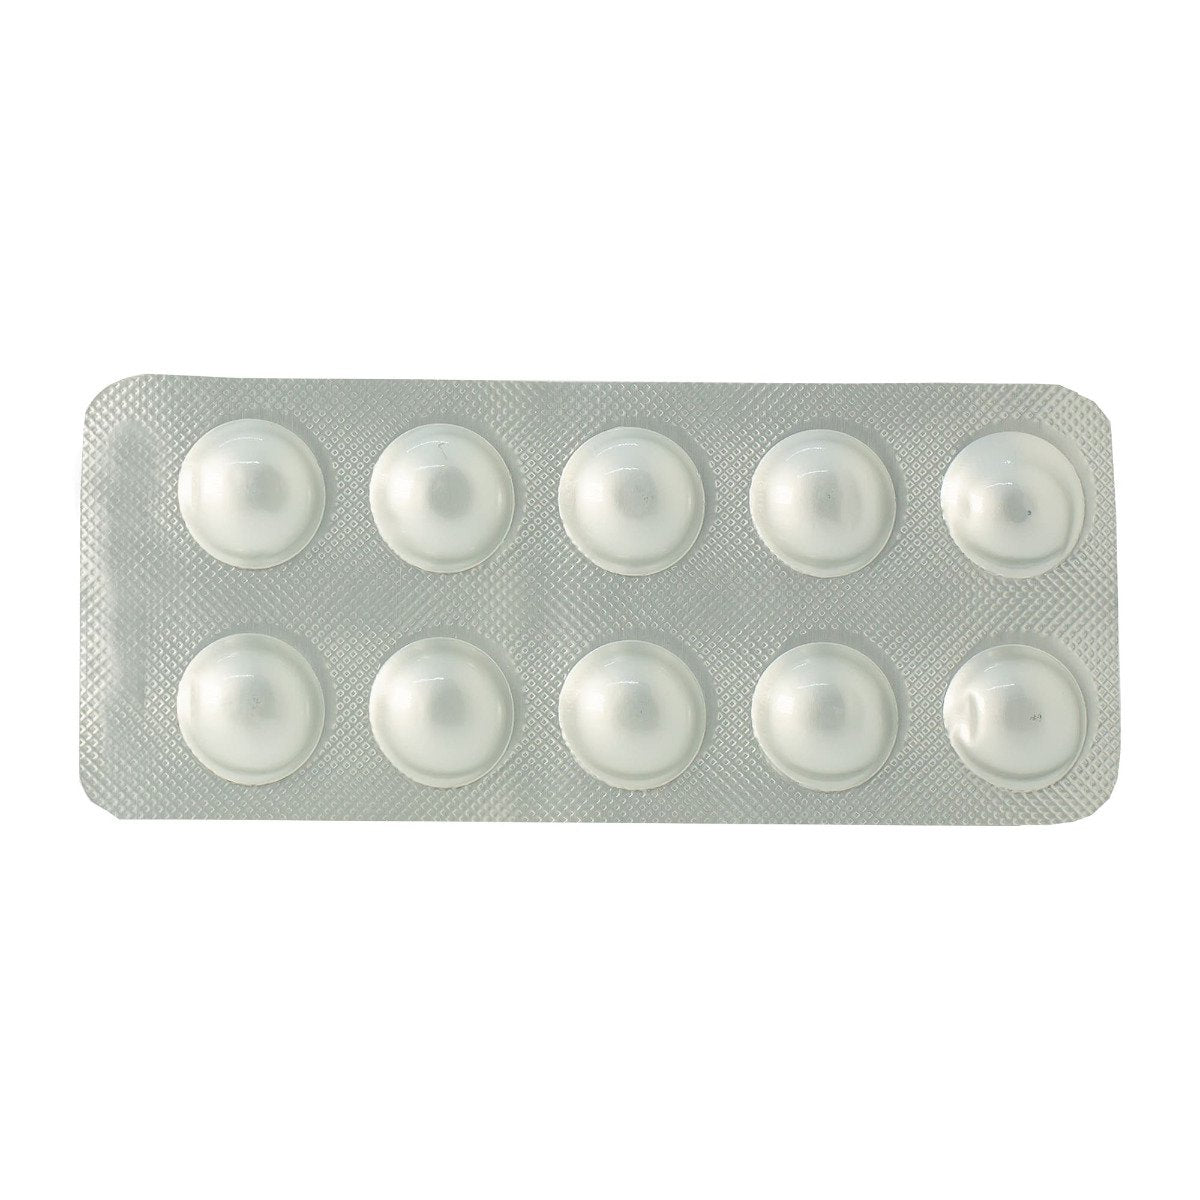 Cobal 500 mcg - 30 Tablets - Bloom Pharmacy